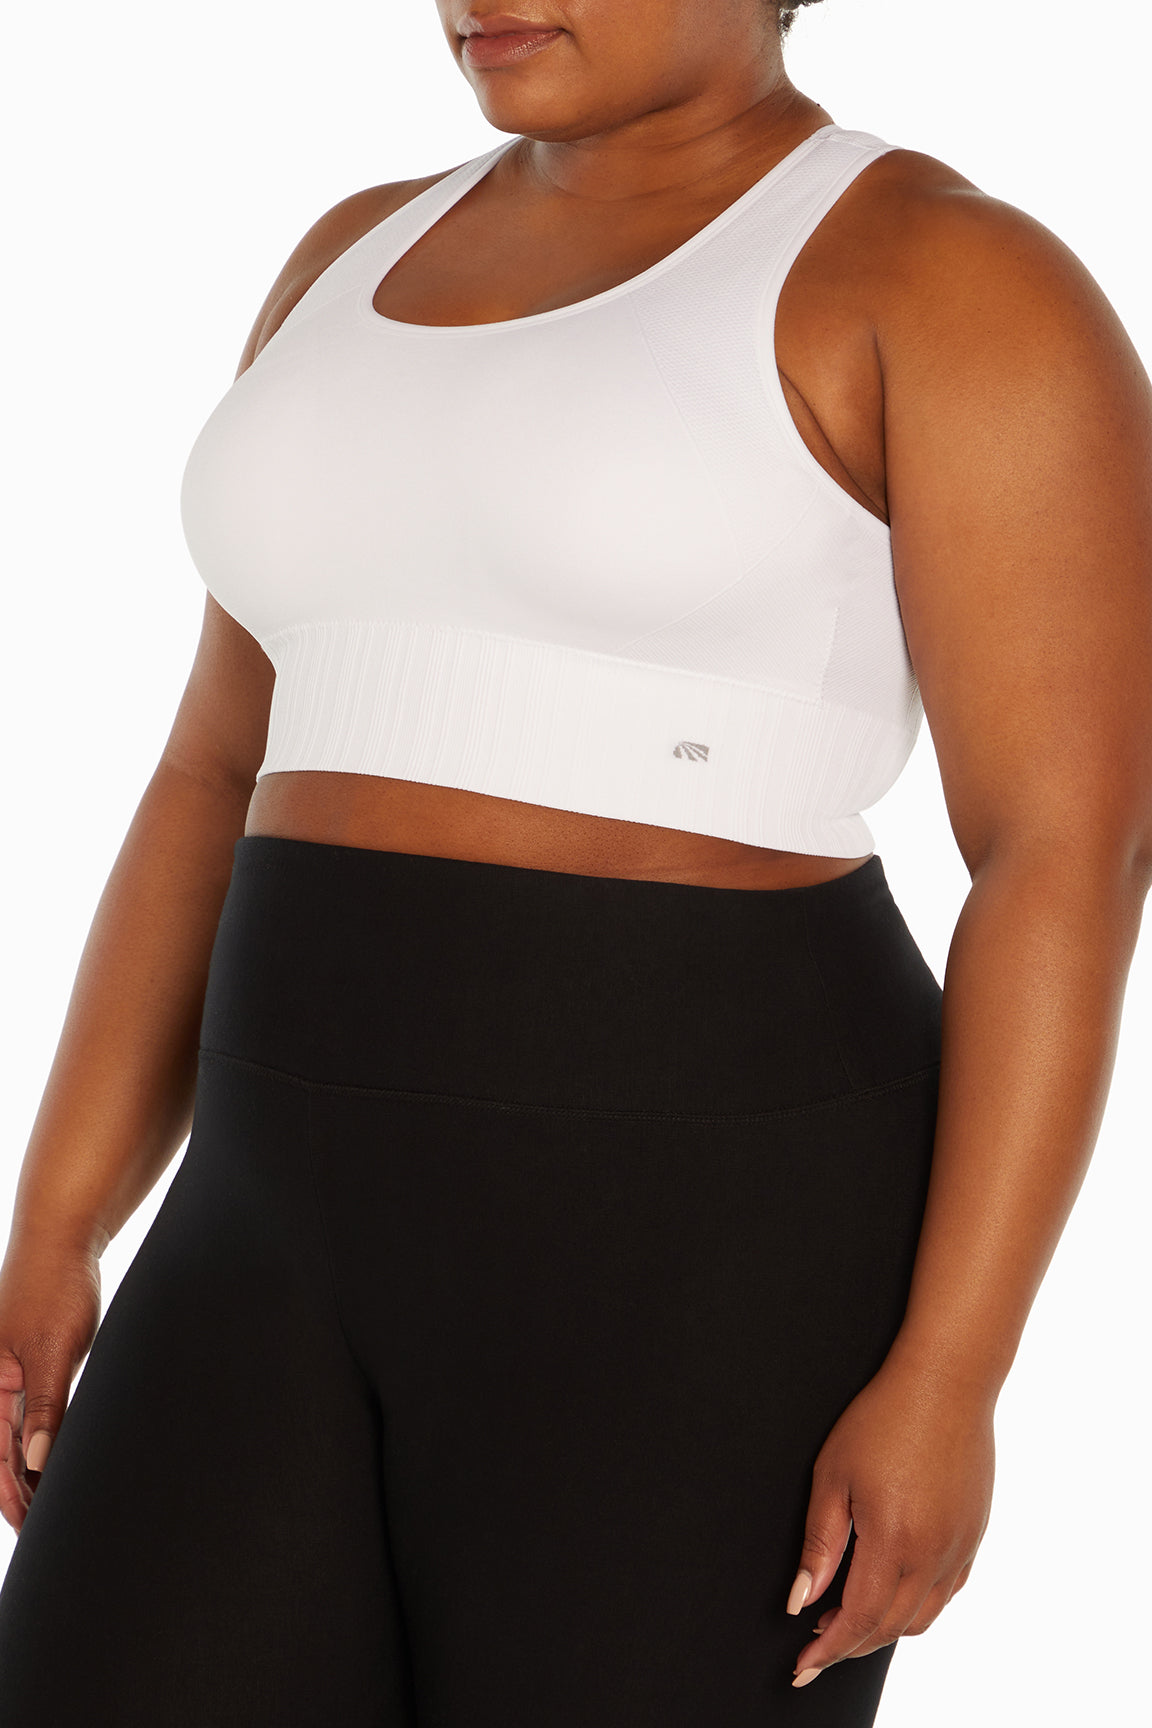 Marika Sports Bra Yoga Gym Top Soft Removable Padding Non-Wired Lace-U –  Worsley_wear